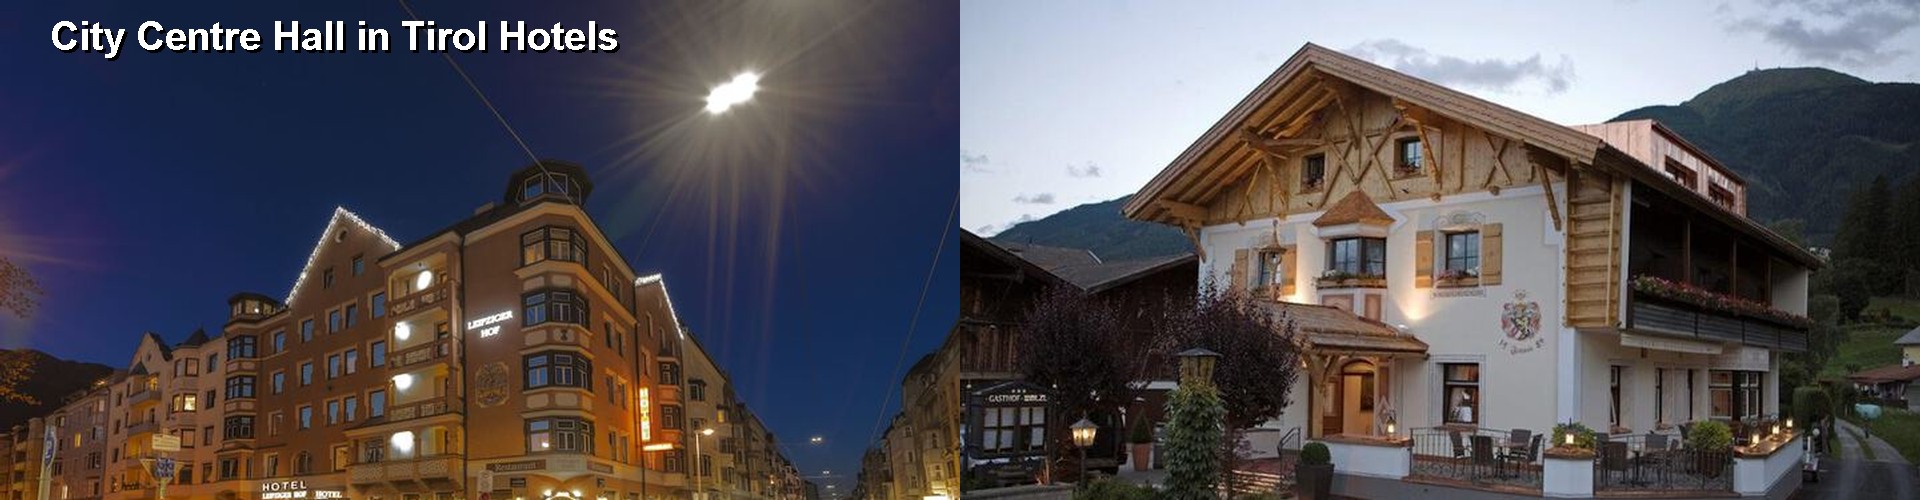 5 Best Hotels near City Centre Hall in Tirol